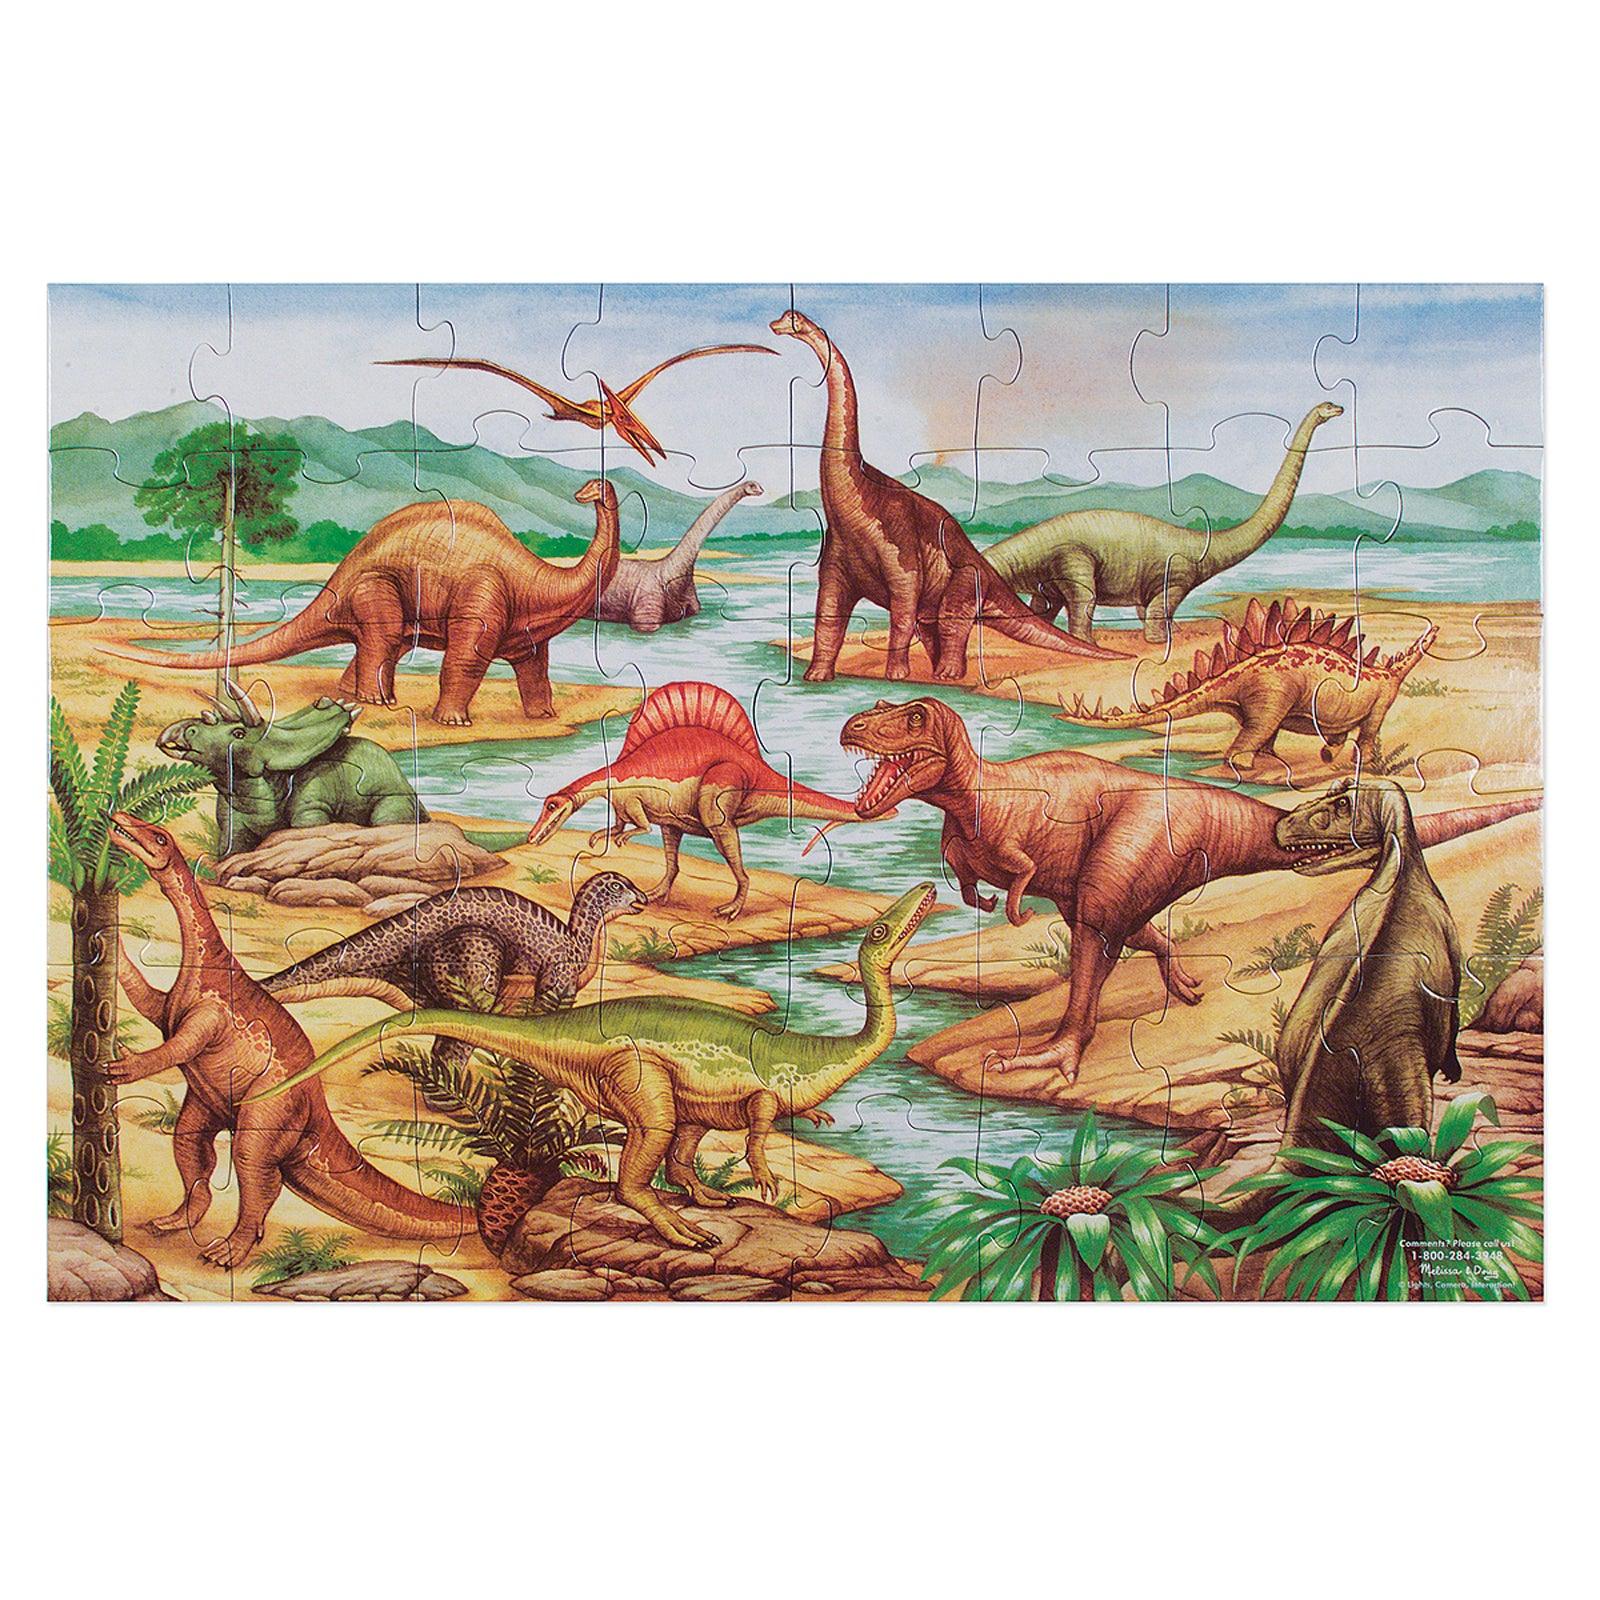 Dinosaurs Floor Puzzle, 24" x 36", 48 Pieces - Loomini